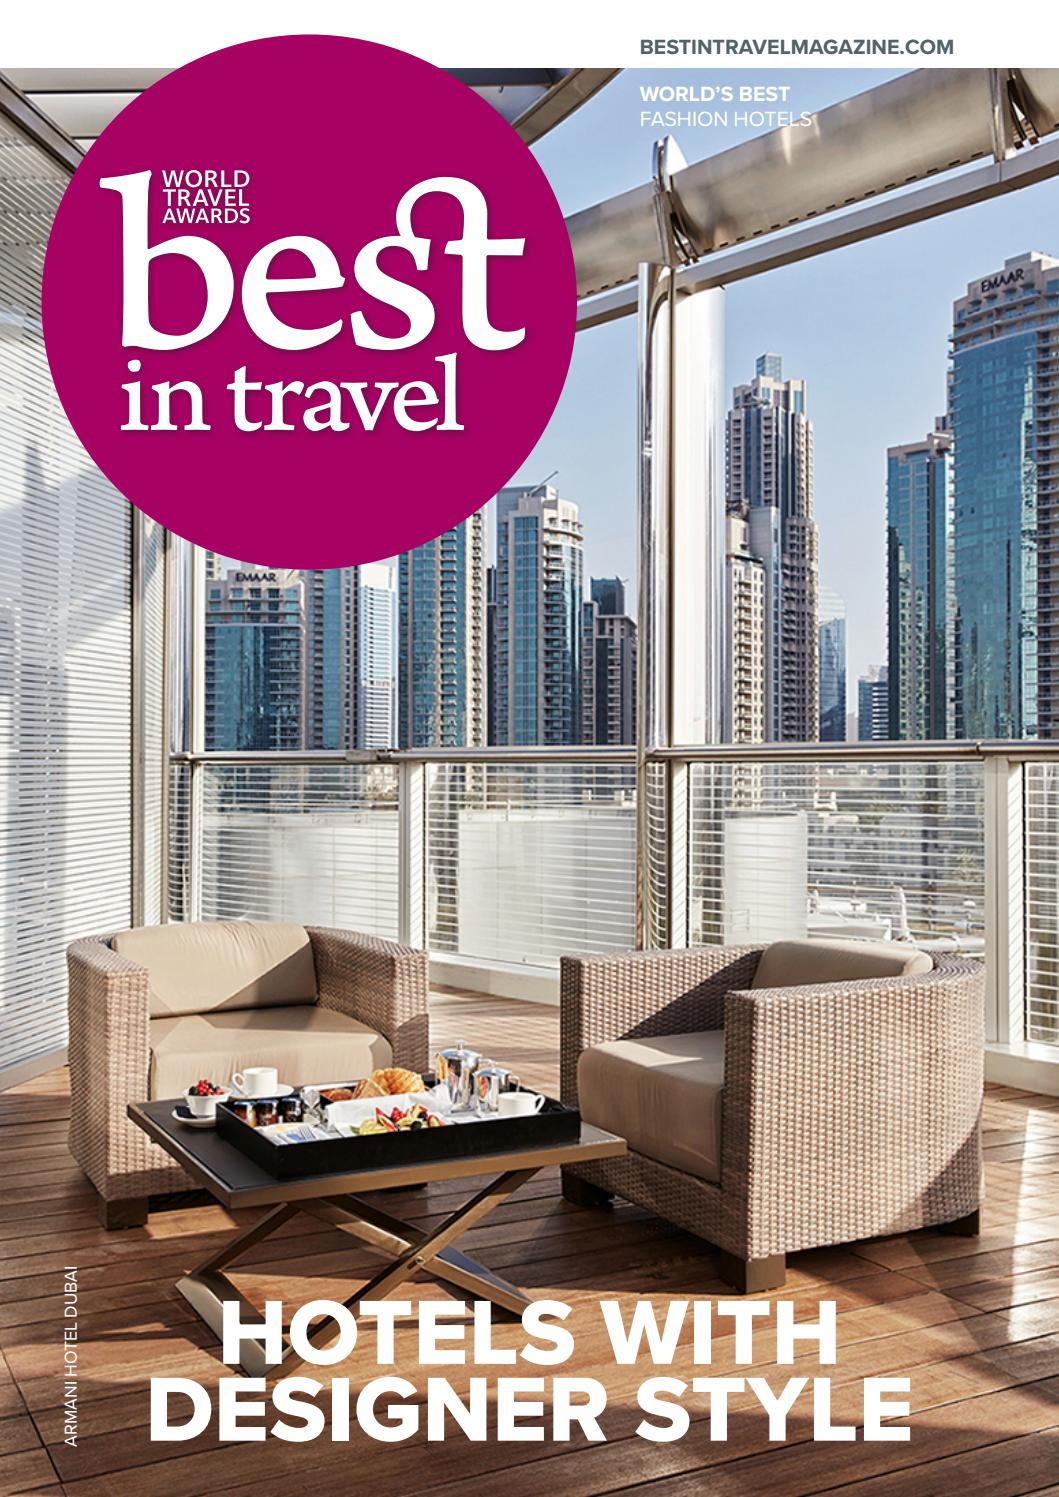 Salon De Jardin Super U 2020 Élégant Best In Travel Magazine issue 67 2018 Discover Hotels